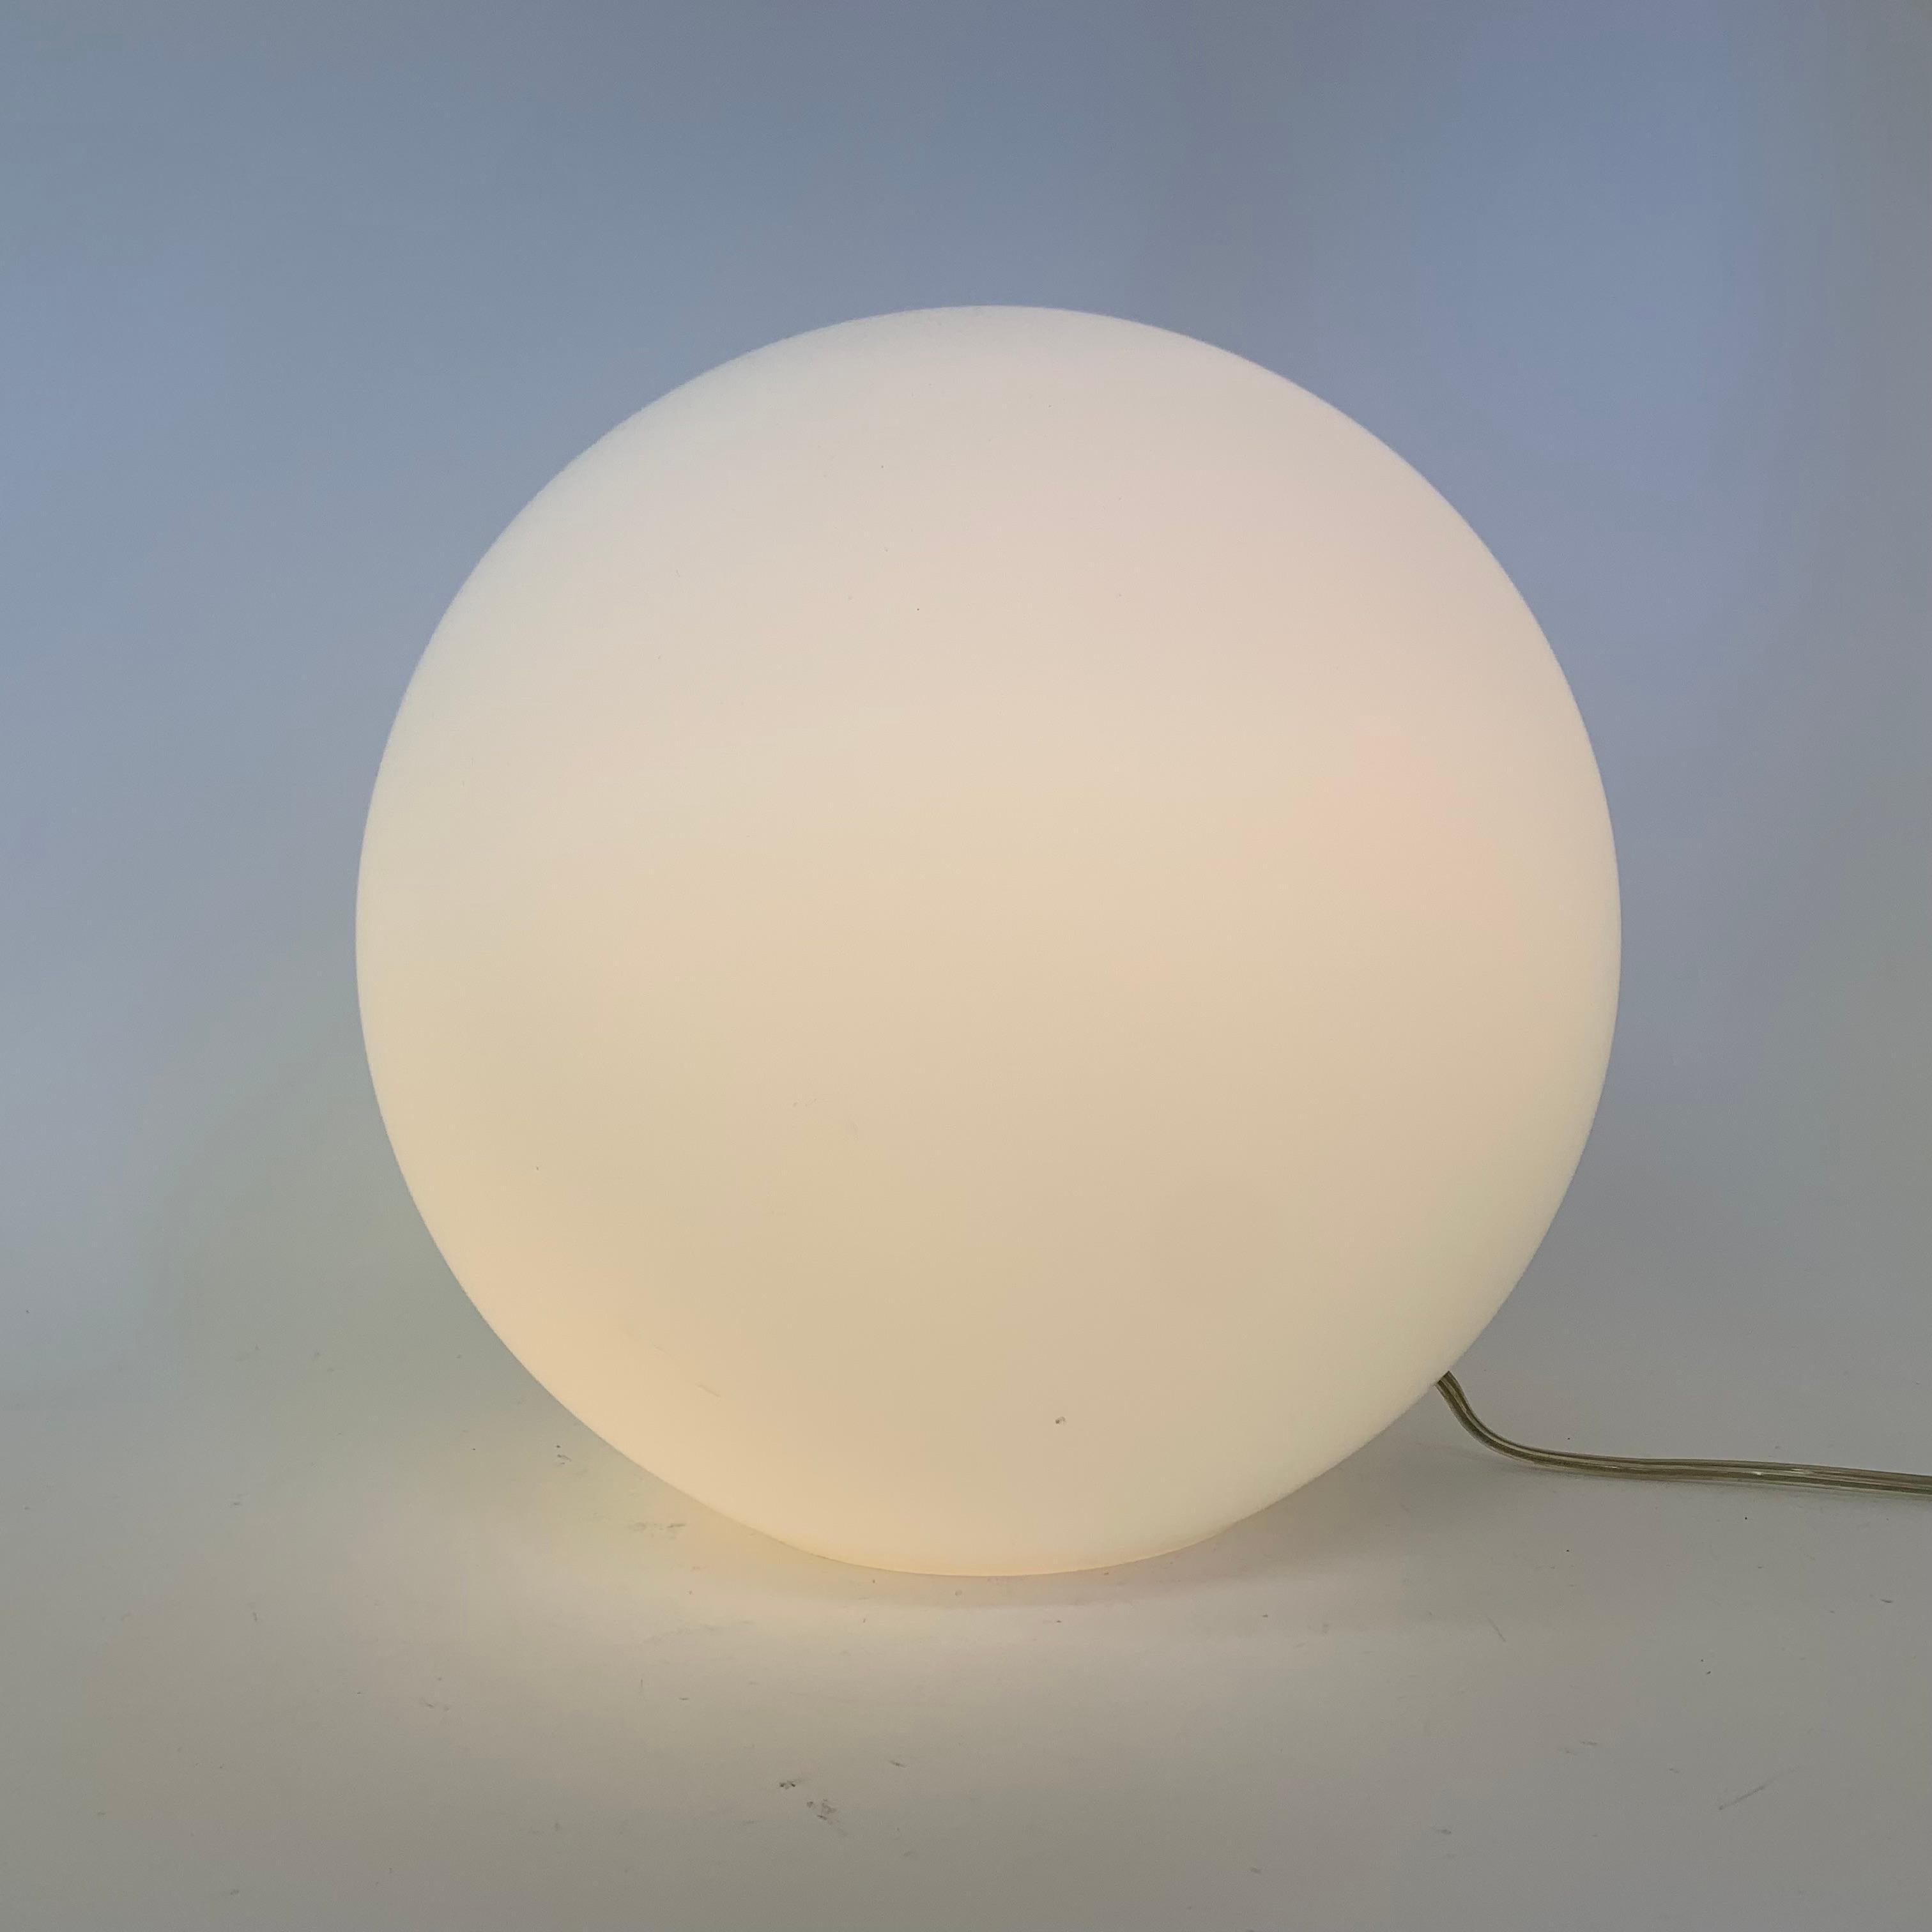 Globe lamp minimalistic design.